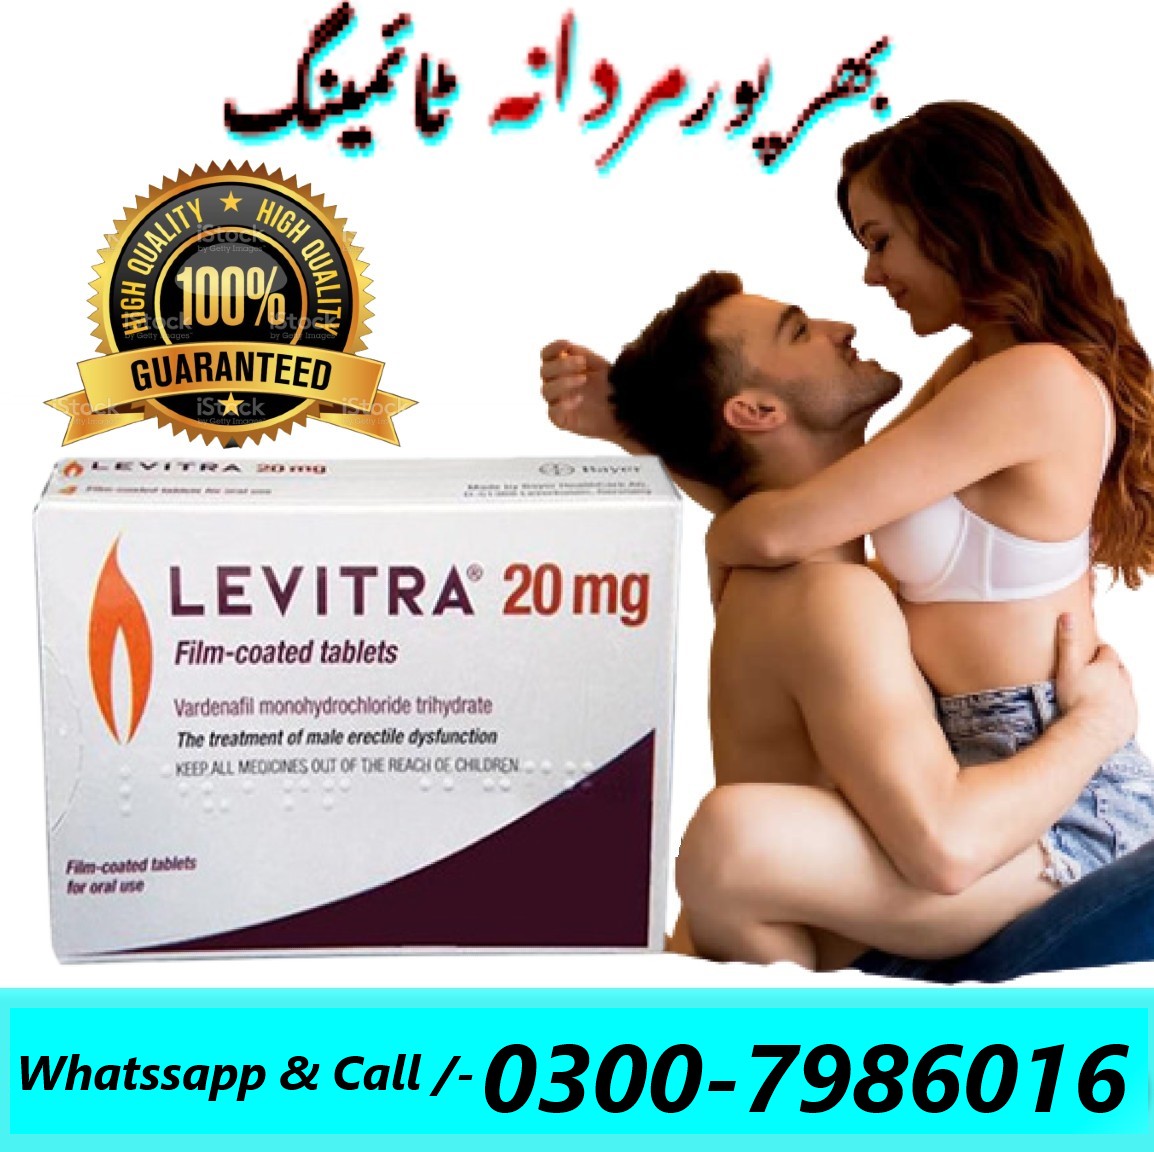 Levitra Tablets 20mg in Pakistan - Whatsapp & Call /-0300-7986016